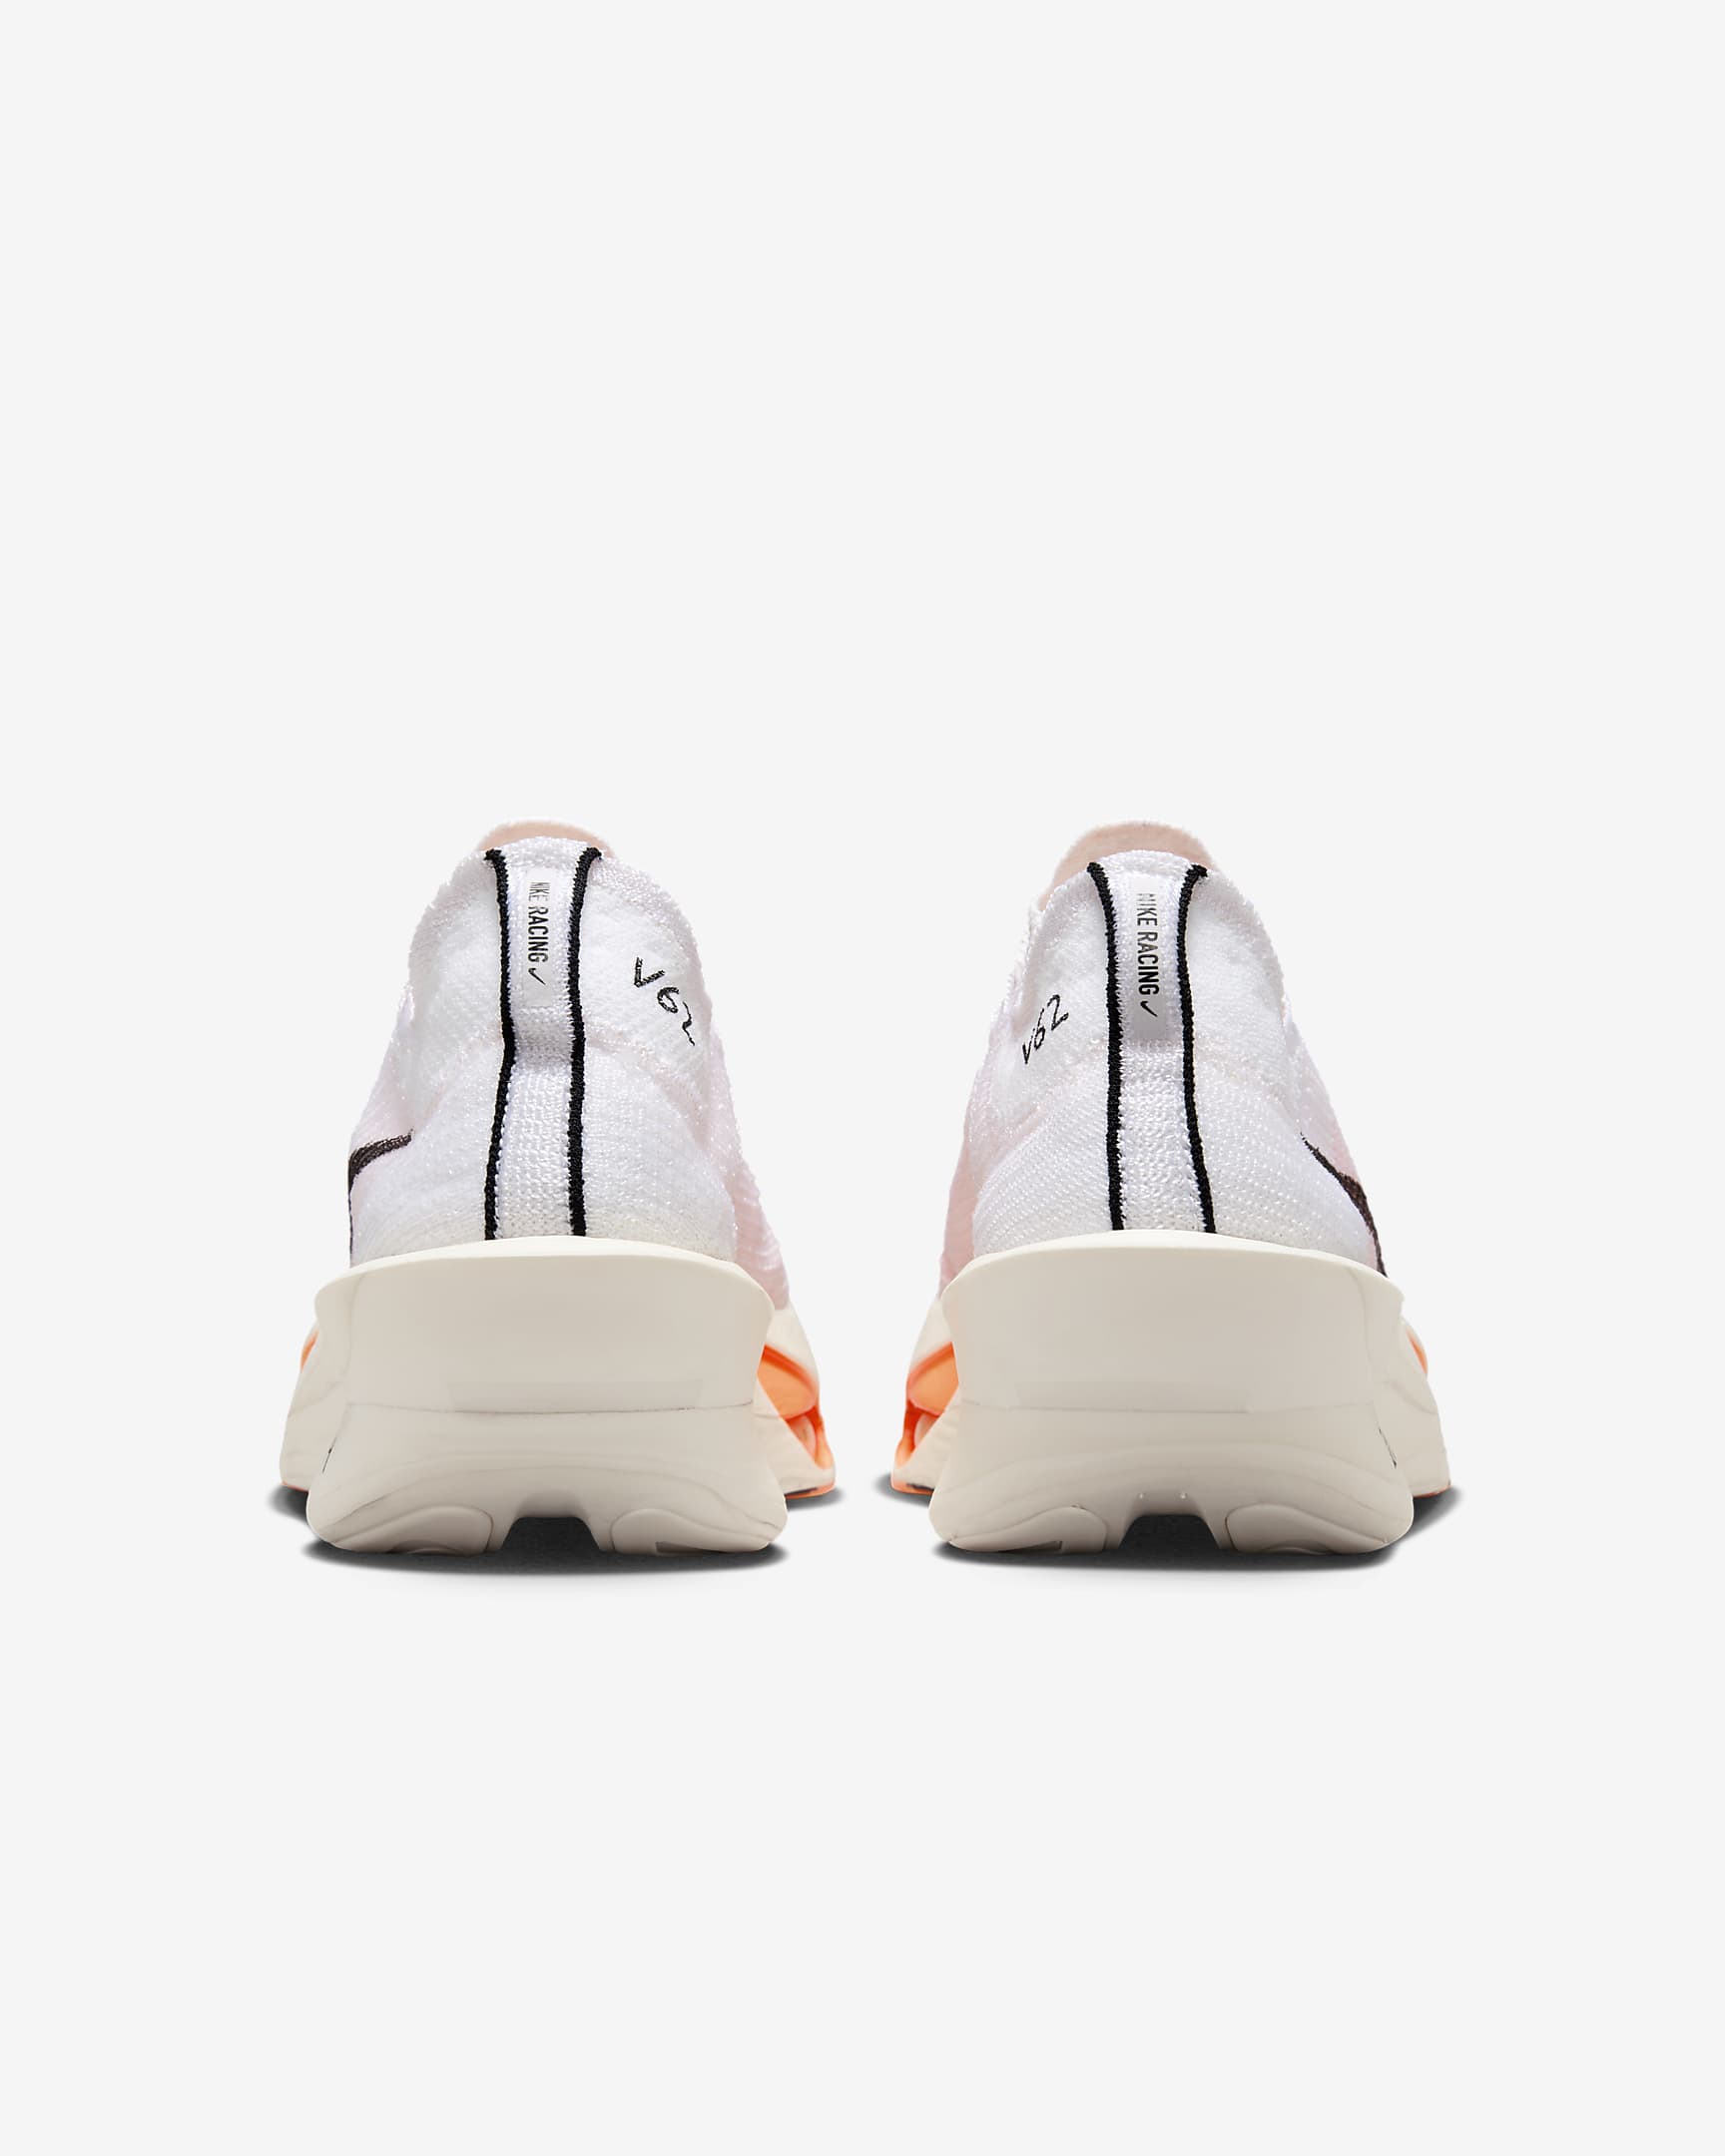 Nike Alphafly 3 Proto Men's Road Racing Shoes - White/Phantom/Total Orange/Black